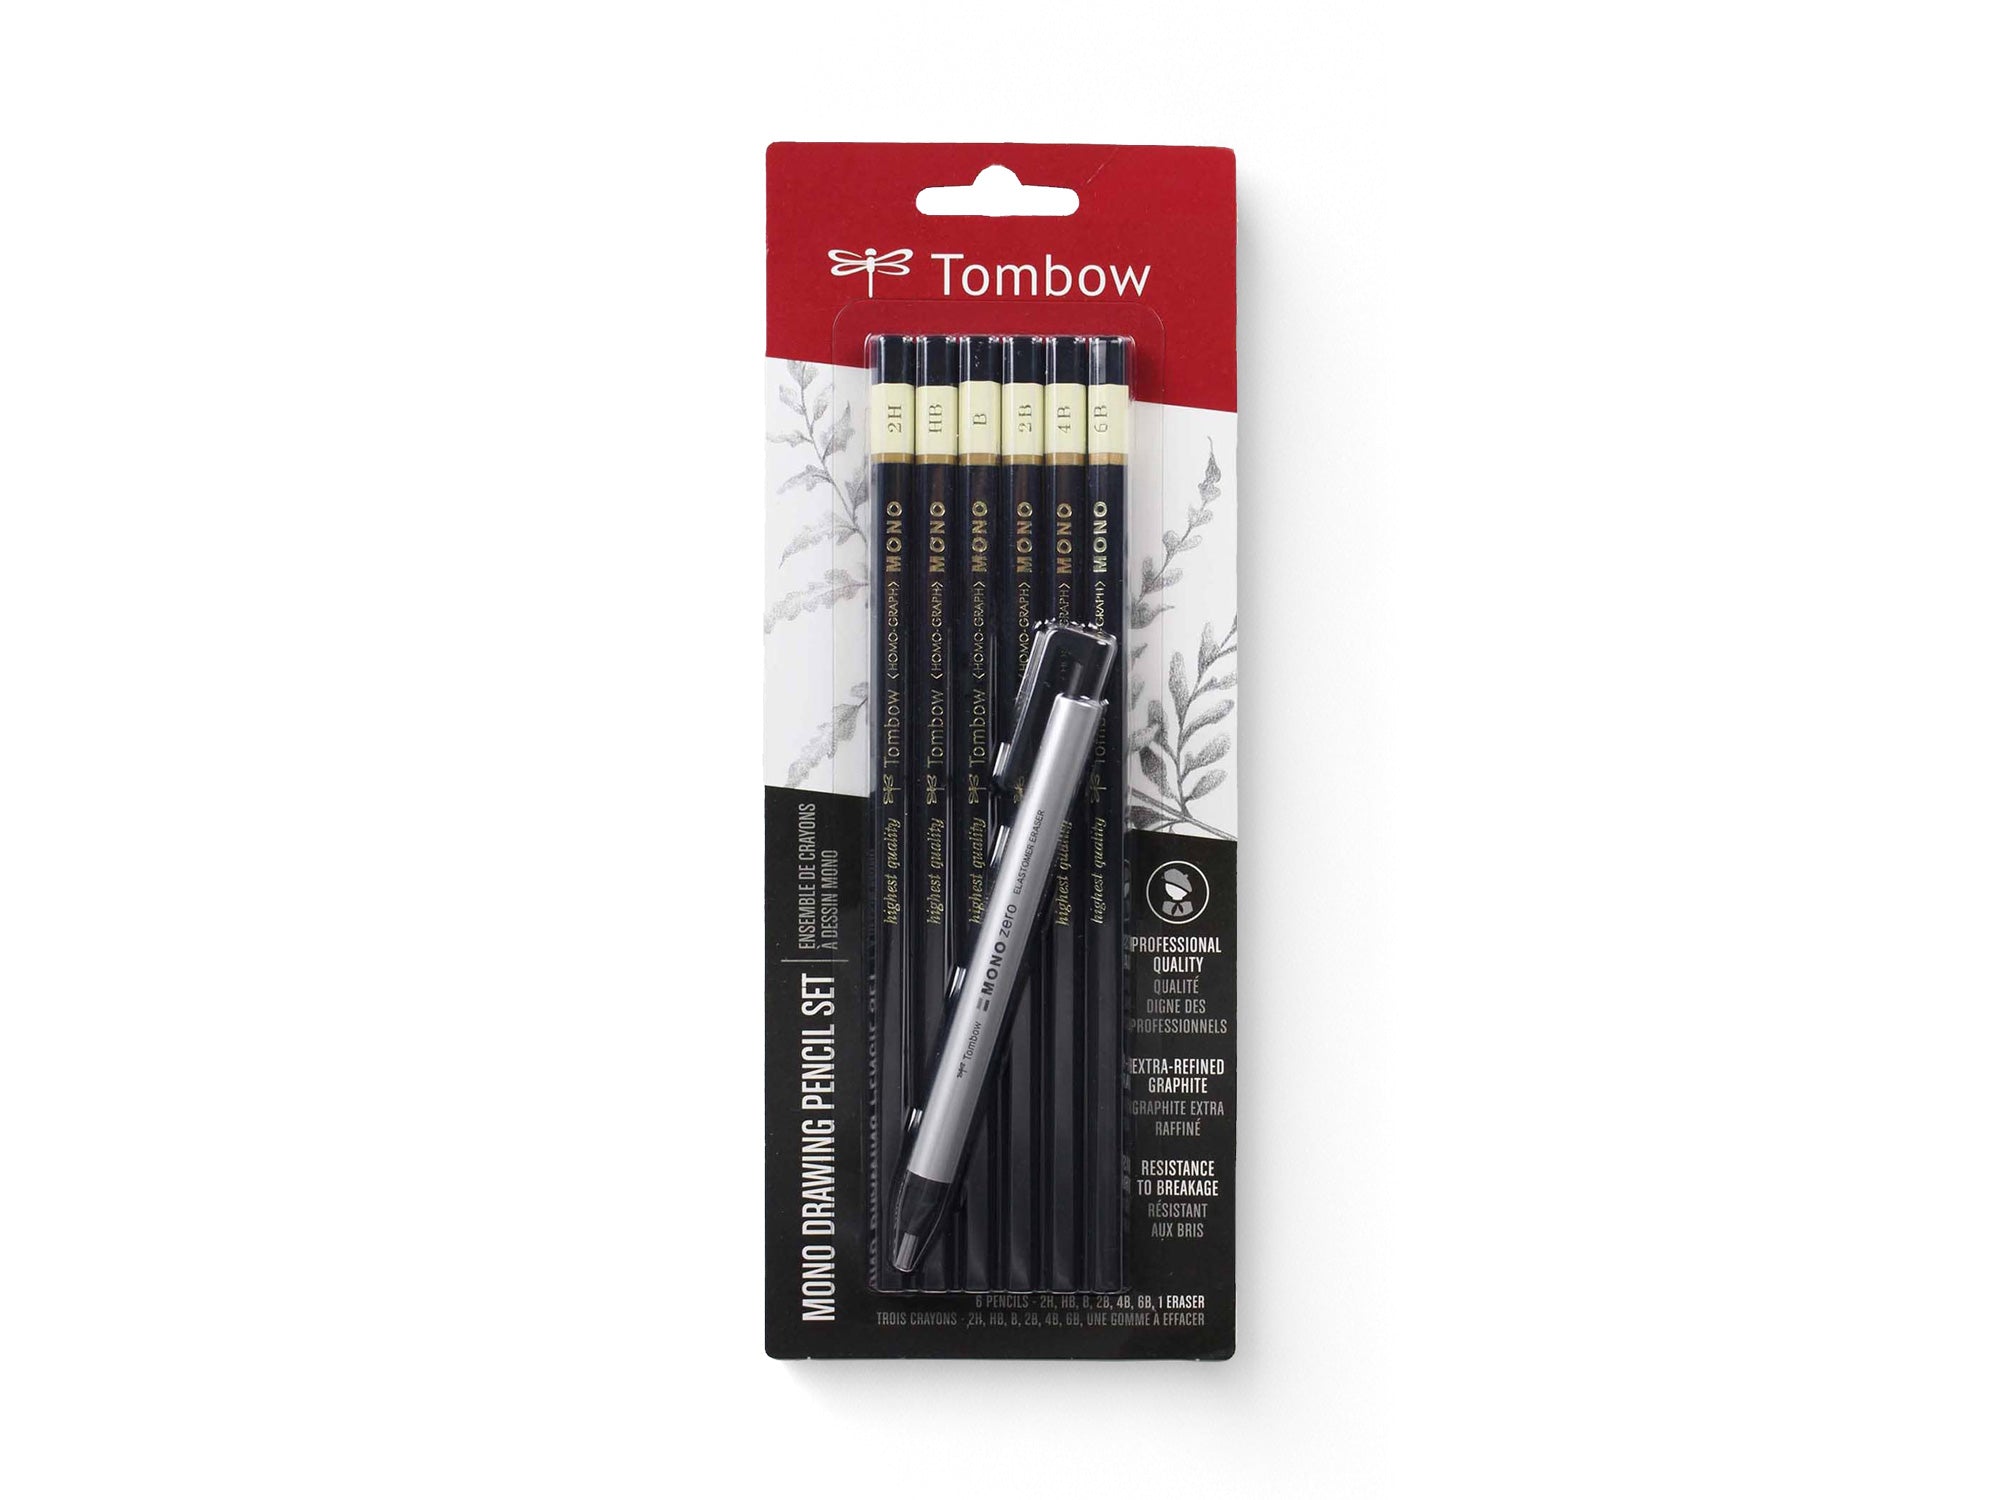 Mono J Drawing Pencil Set - 6 Pack - Home